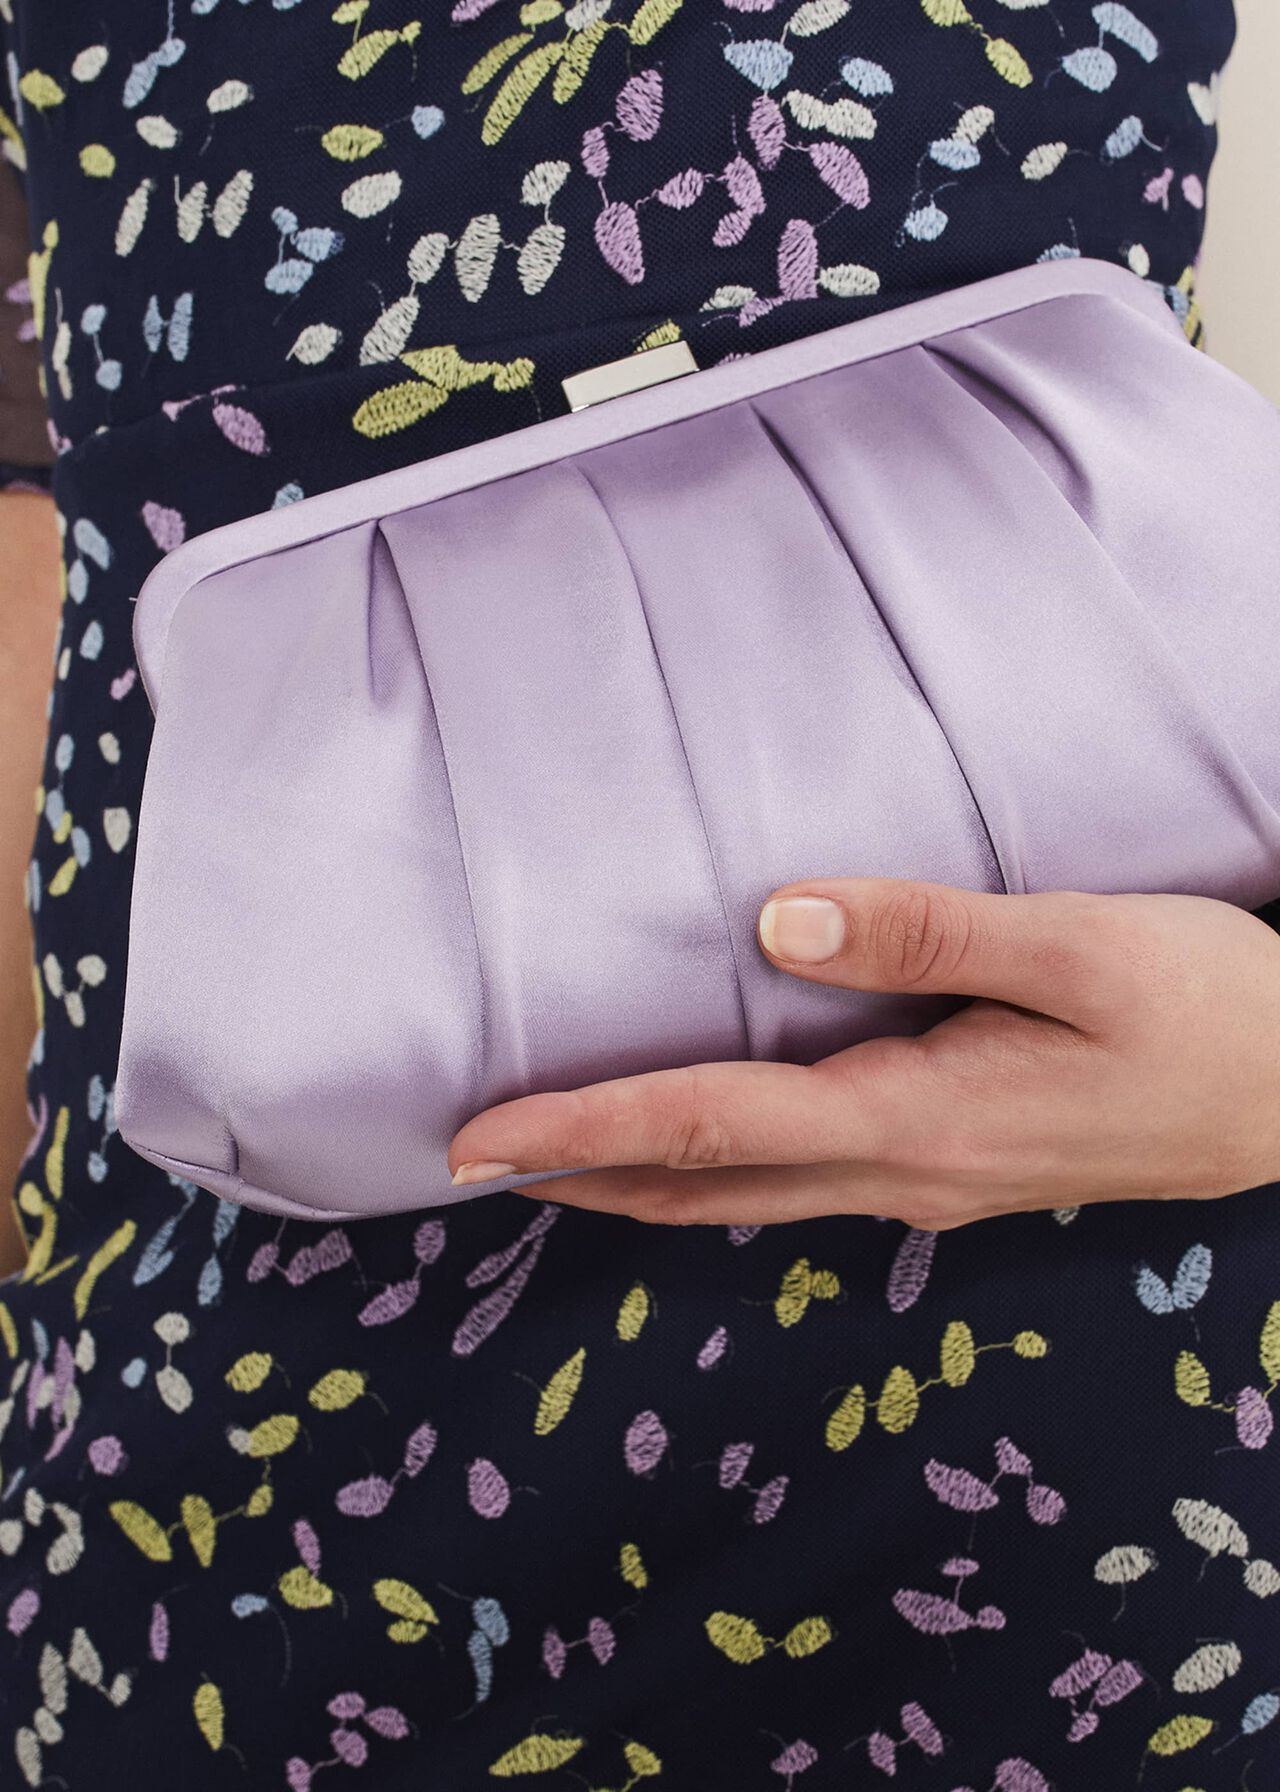 Purple Satin Pleated Clutch Bag